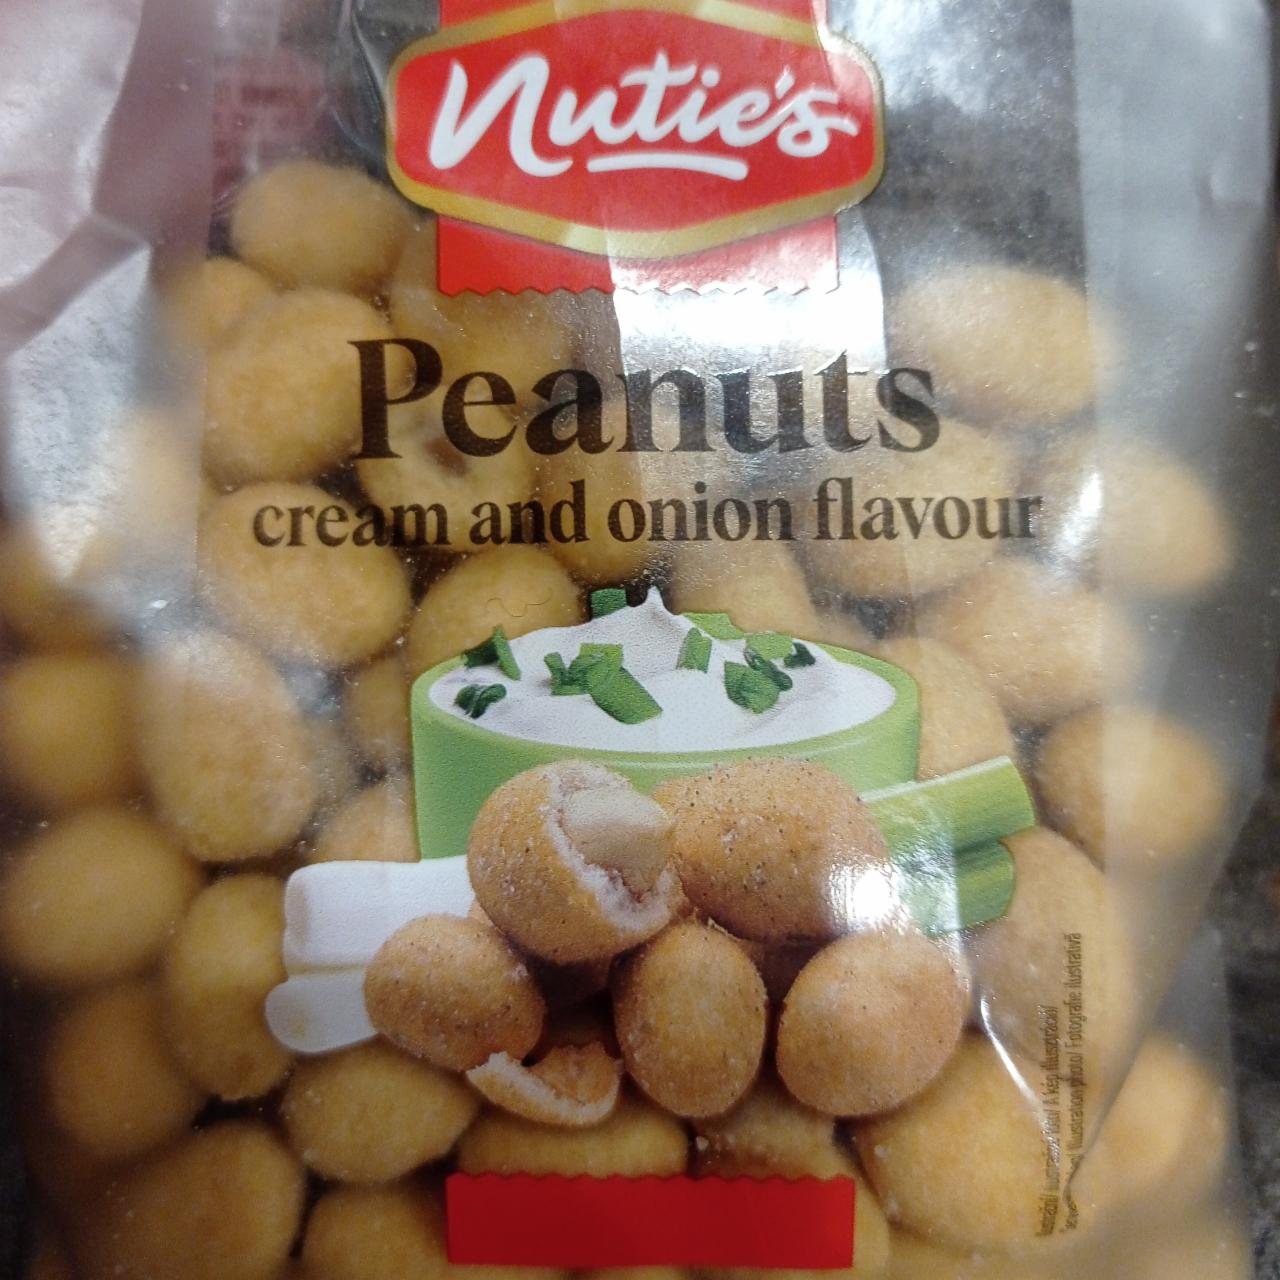 Fotografie - Peanuts cream and onion flavour Nutie's